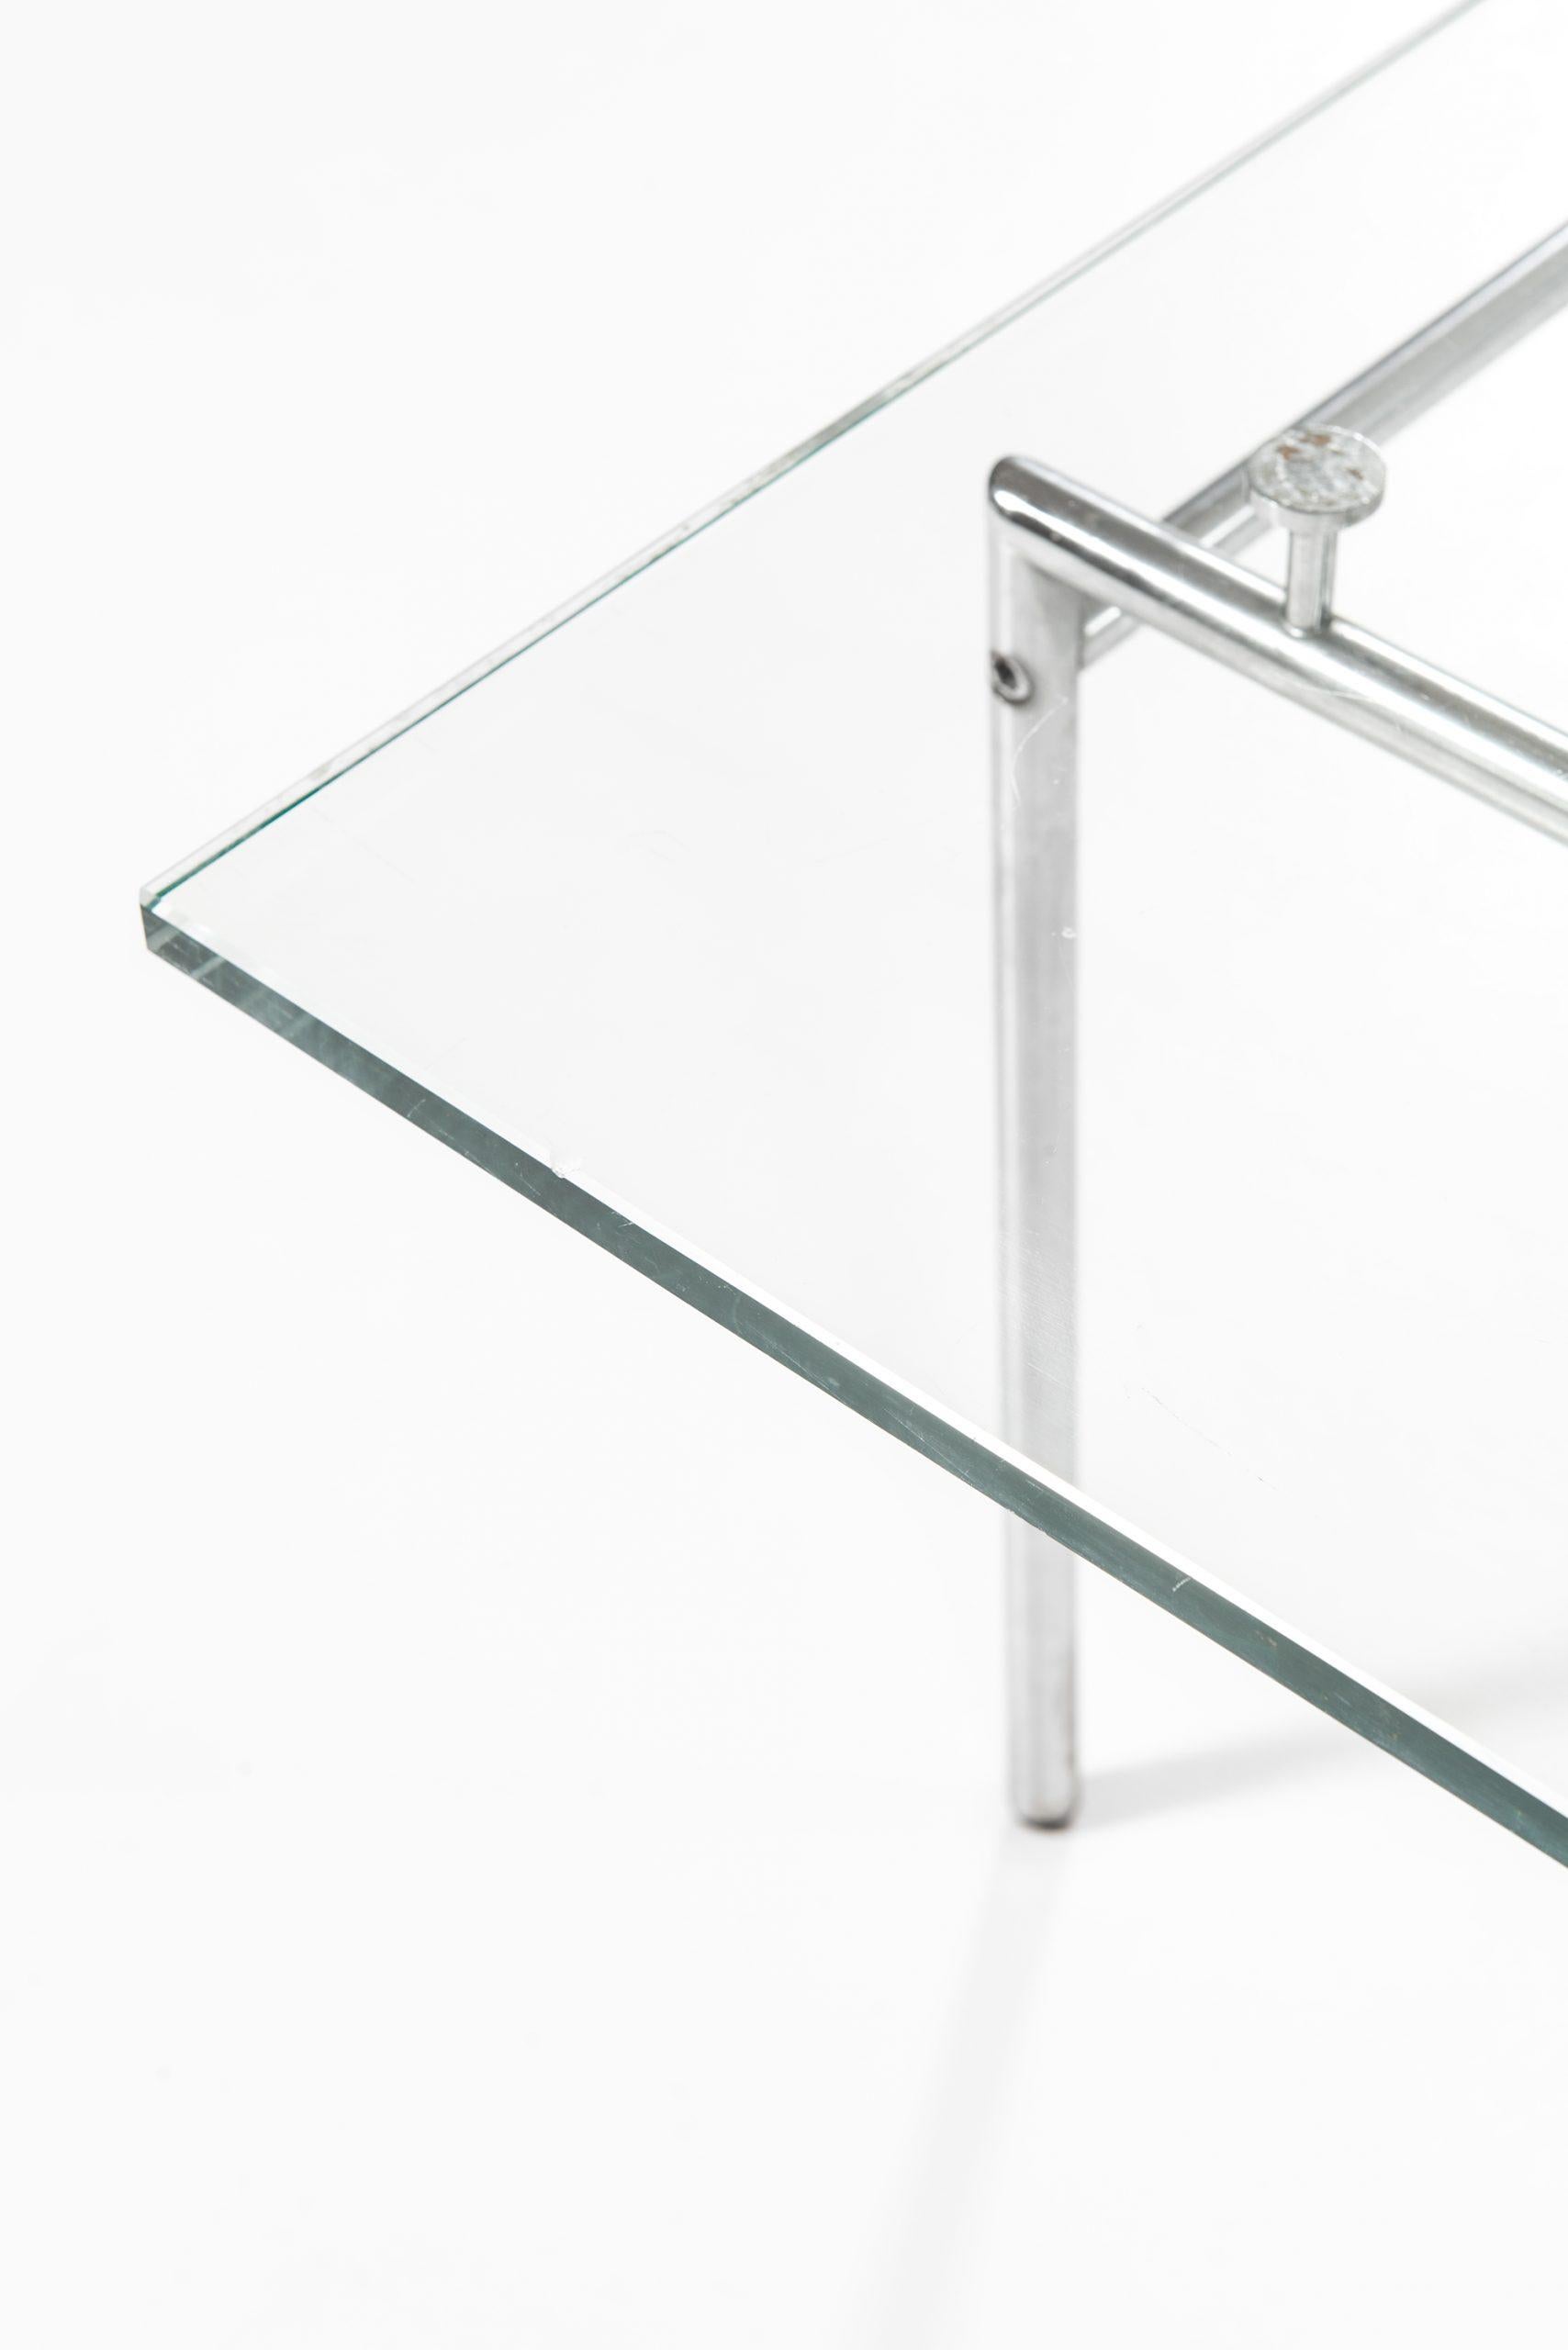 Scandinave moderne Table basse Poul Nrreklit produite par Selectform au Danemark en vente